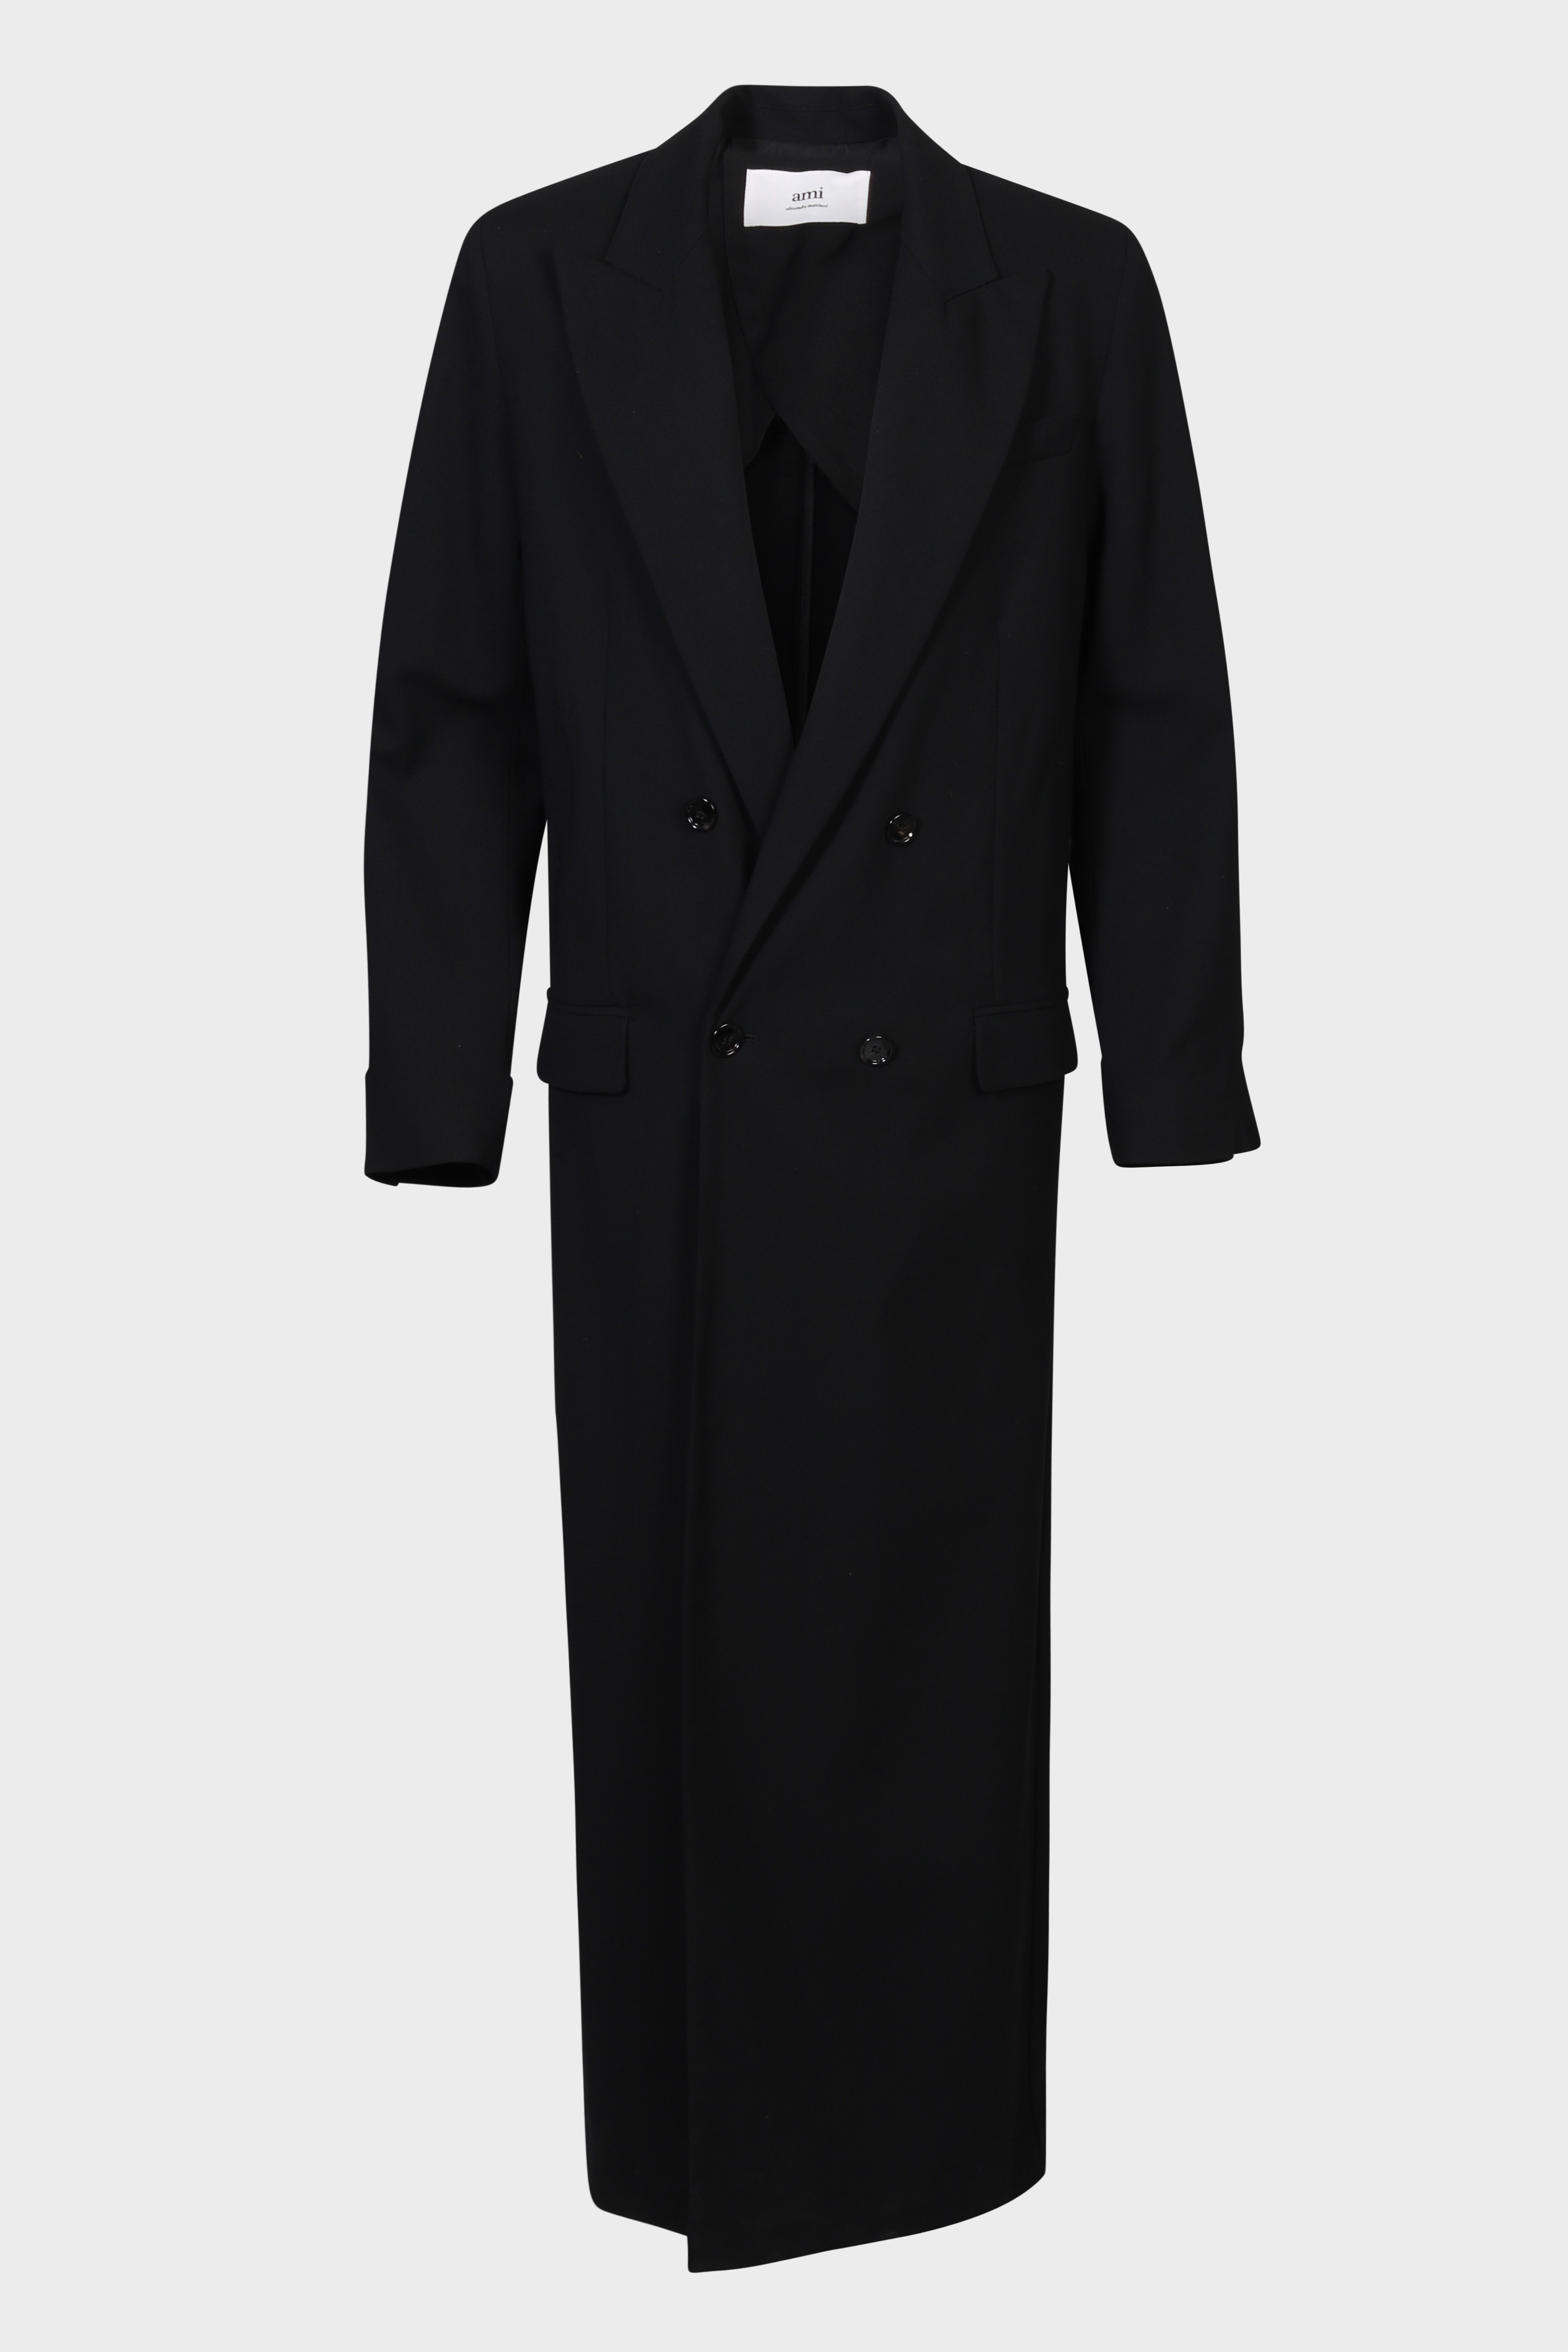 AMI PARIS Gabardine Coat Dress in Black